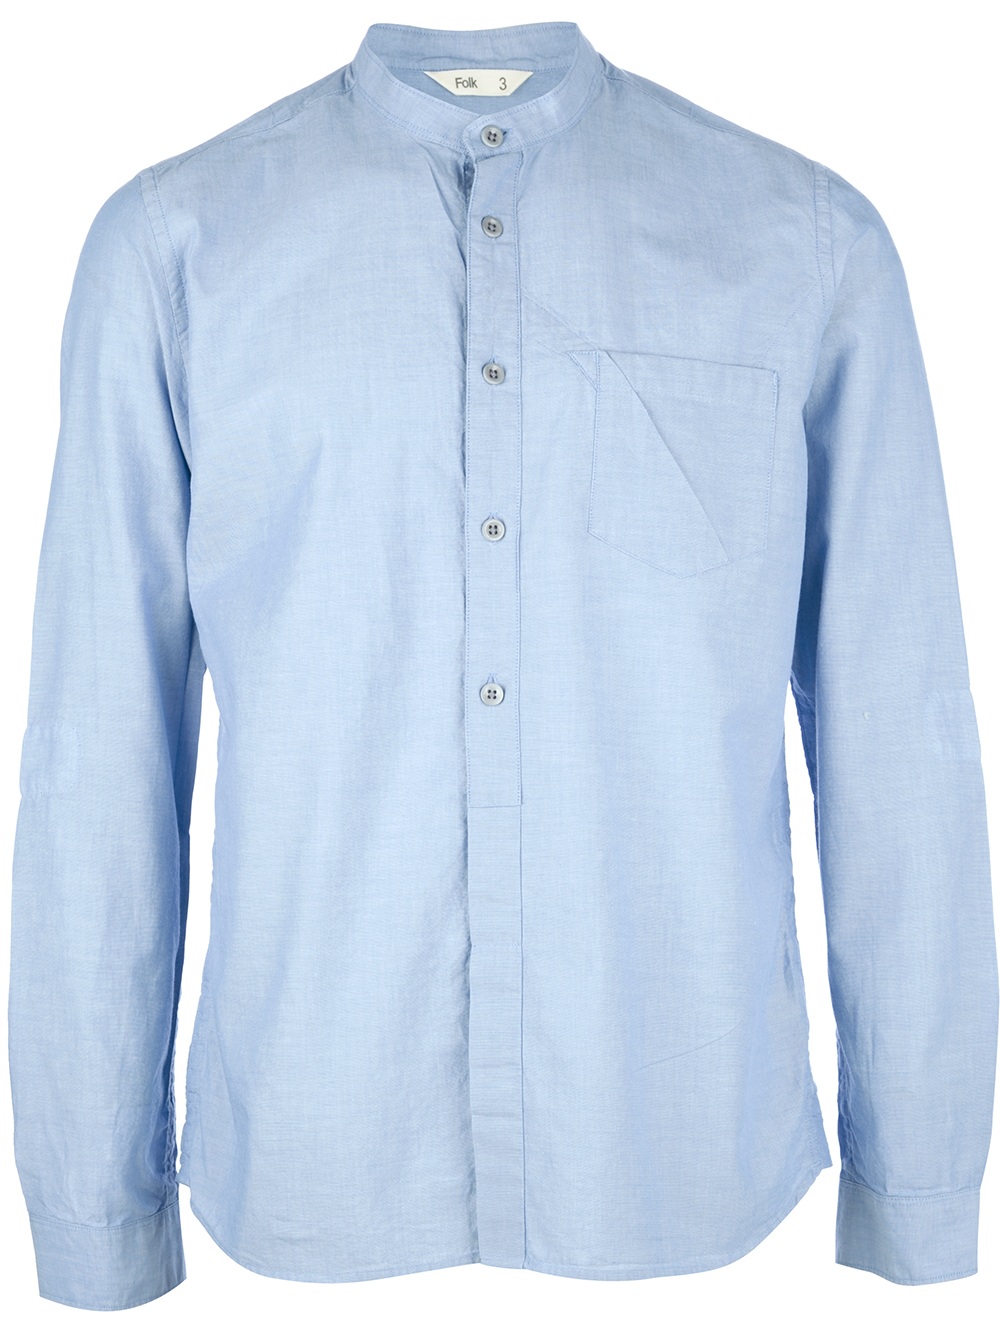 Lyst - Folk Grandad Collar Shirt in Blue for Men